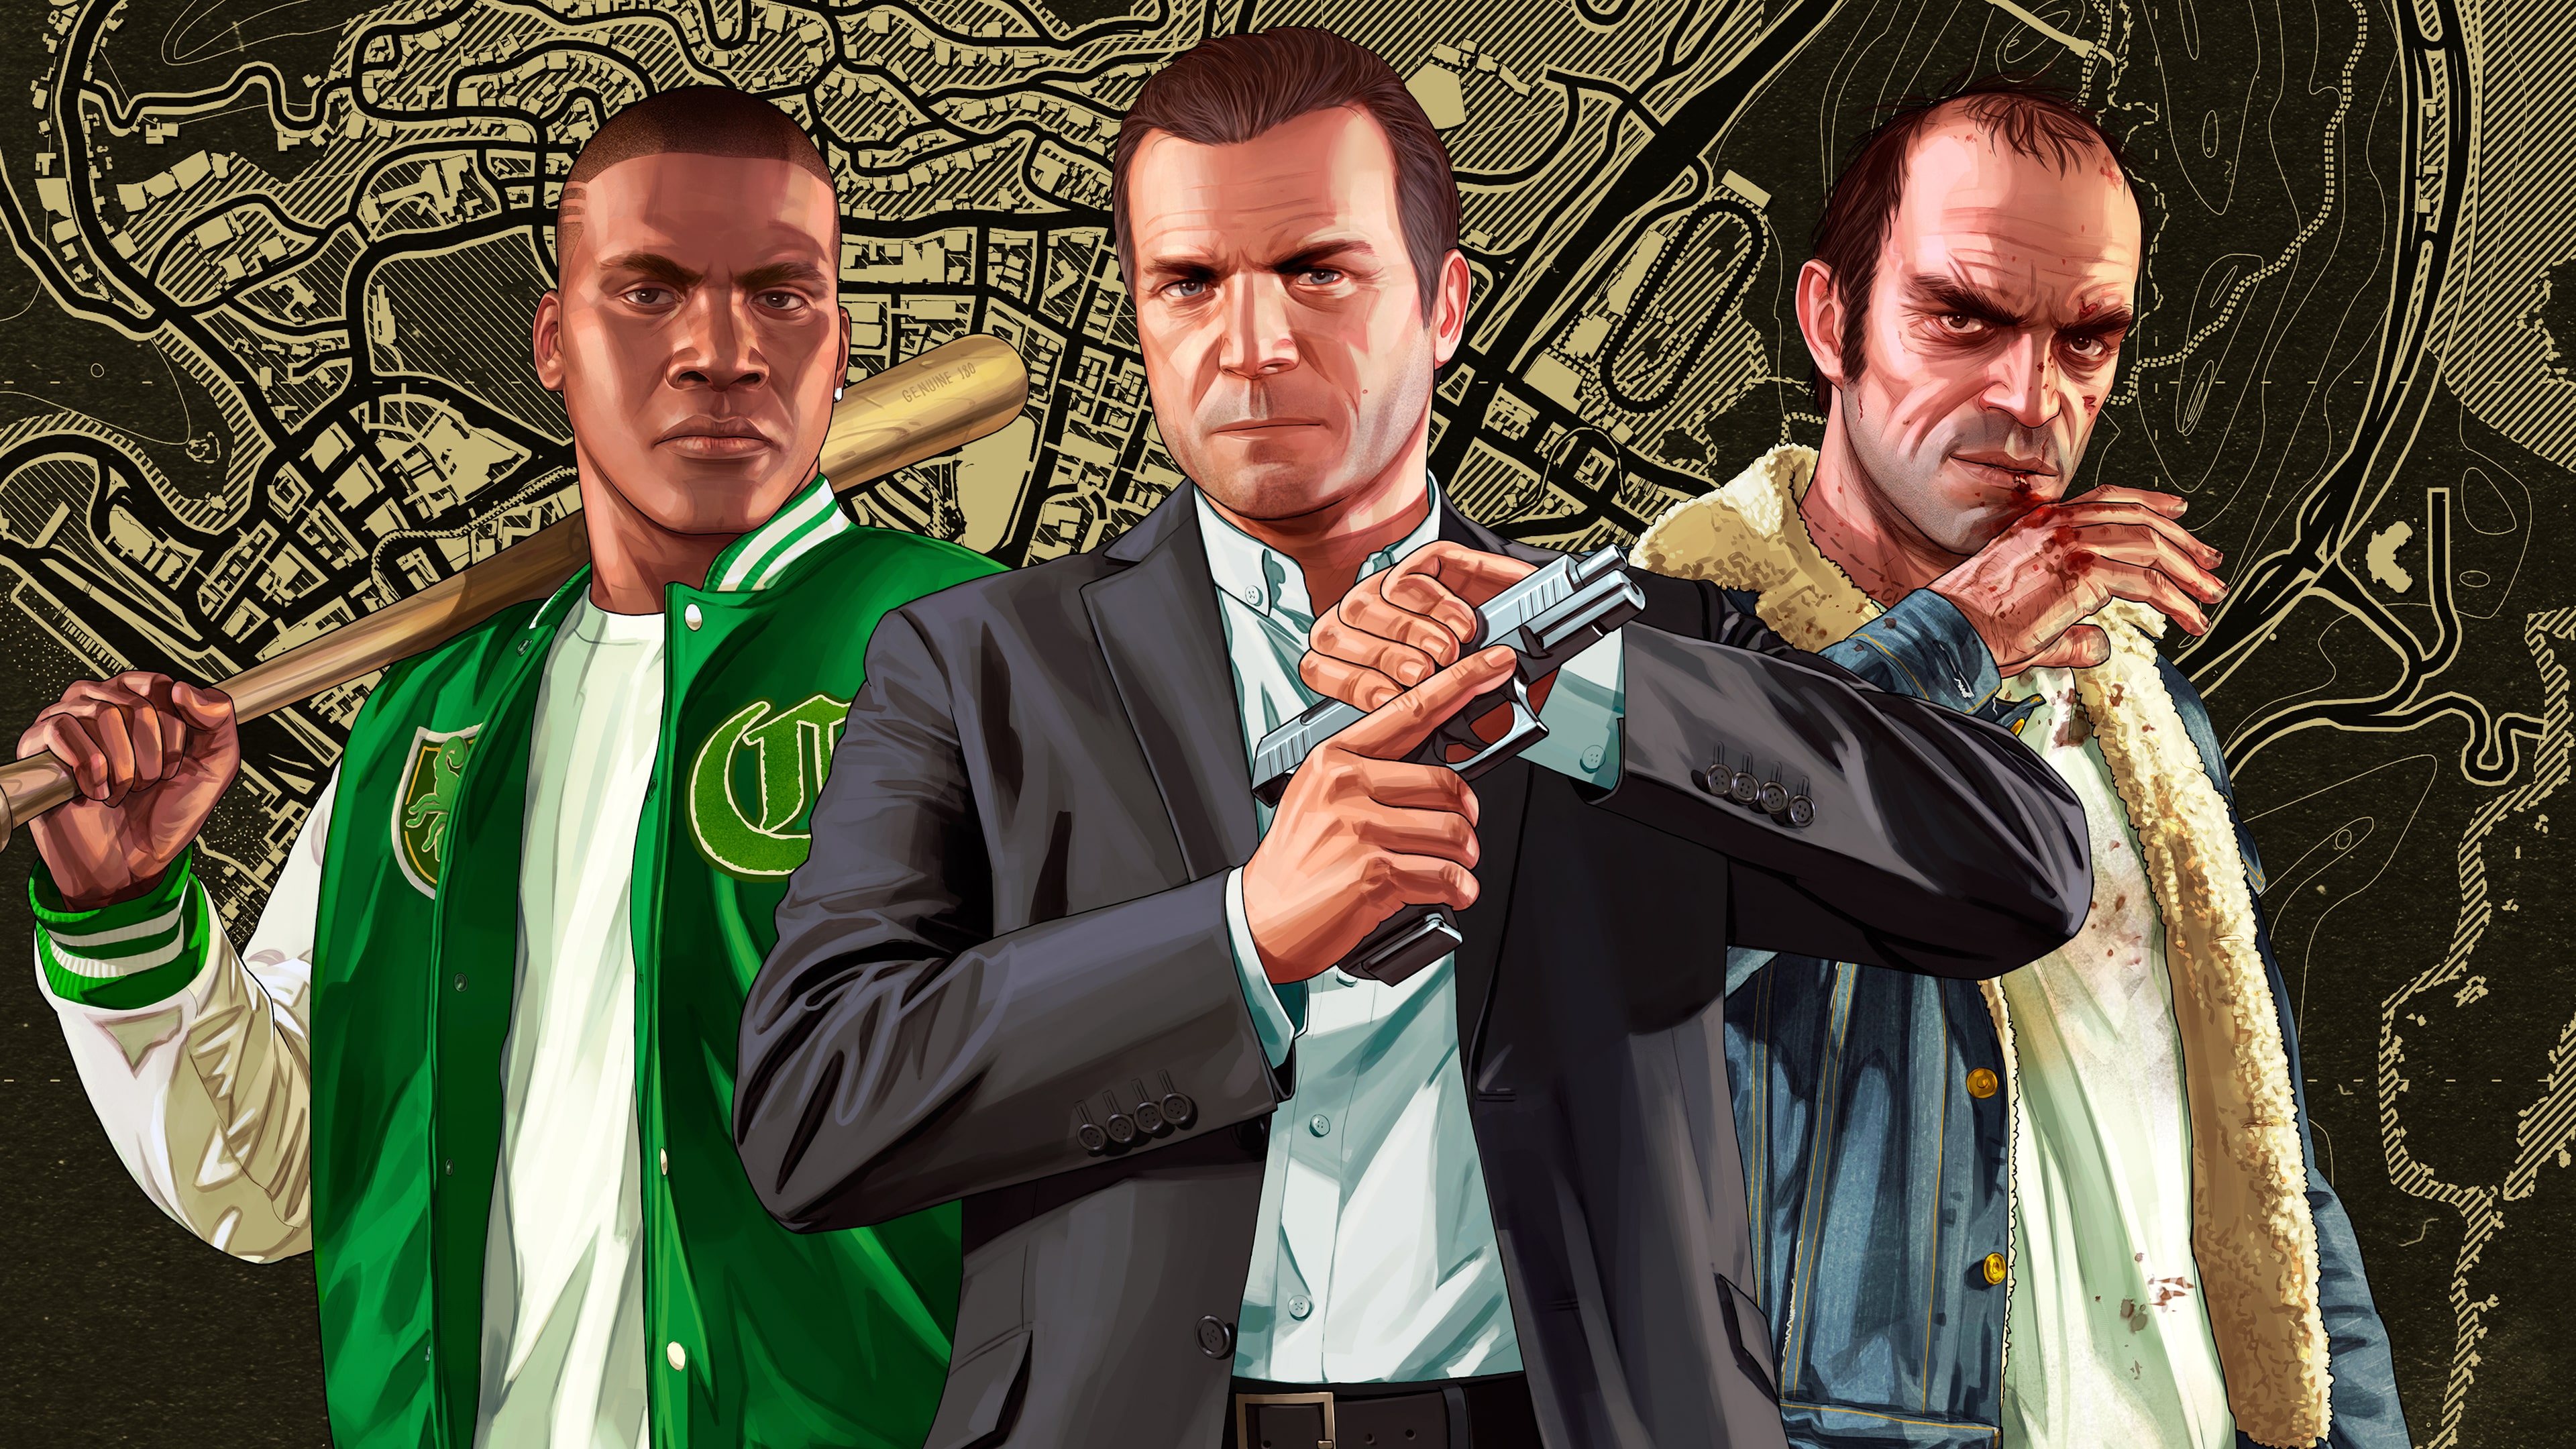 Grand Theft Auto V (PlayStation®5) (중국어(간체자), 한국어, 영어, 중국어(번체자))